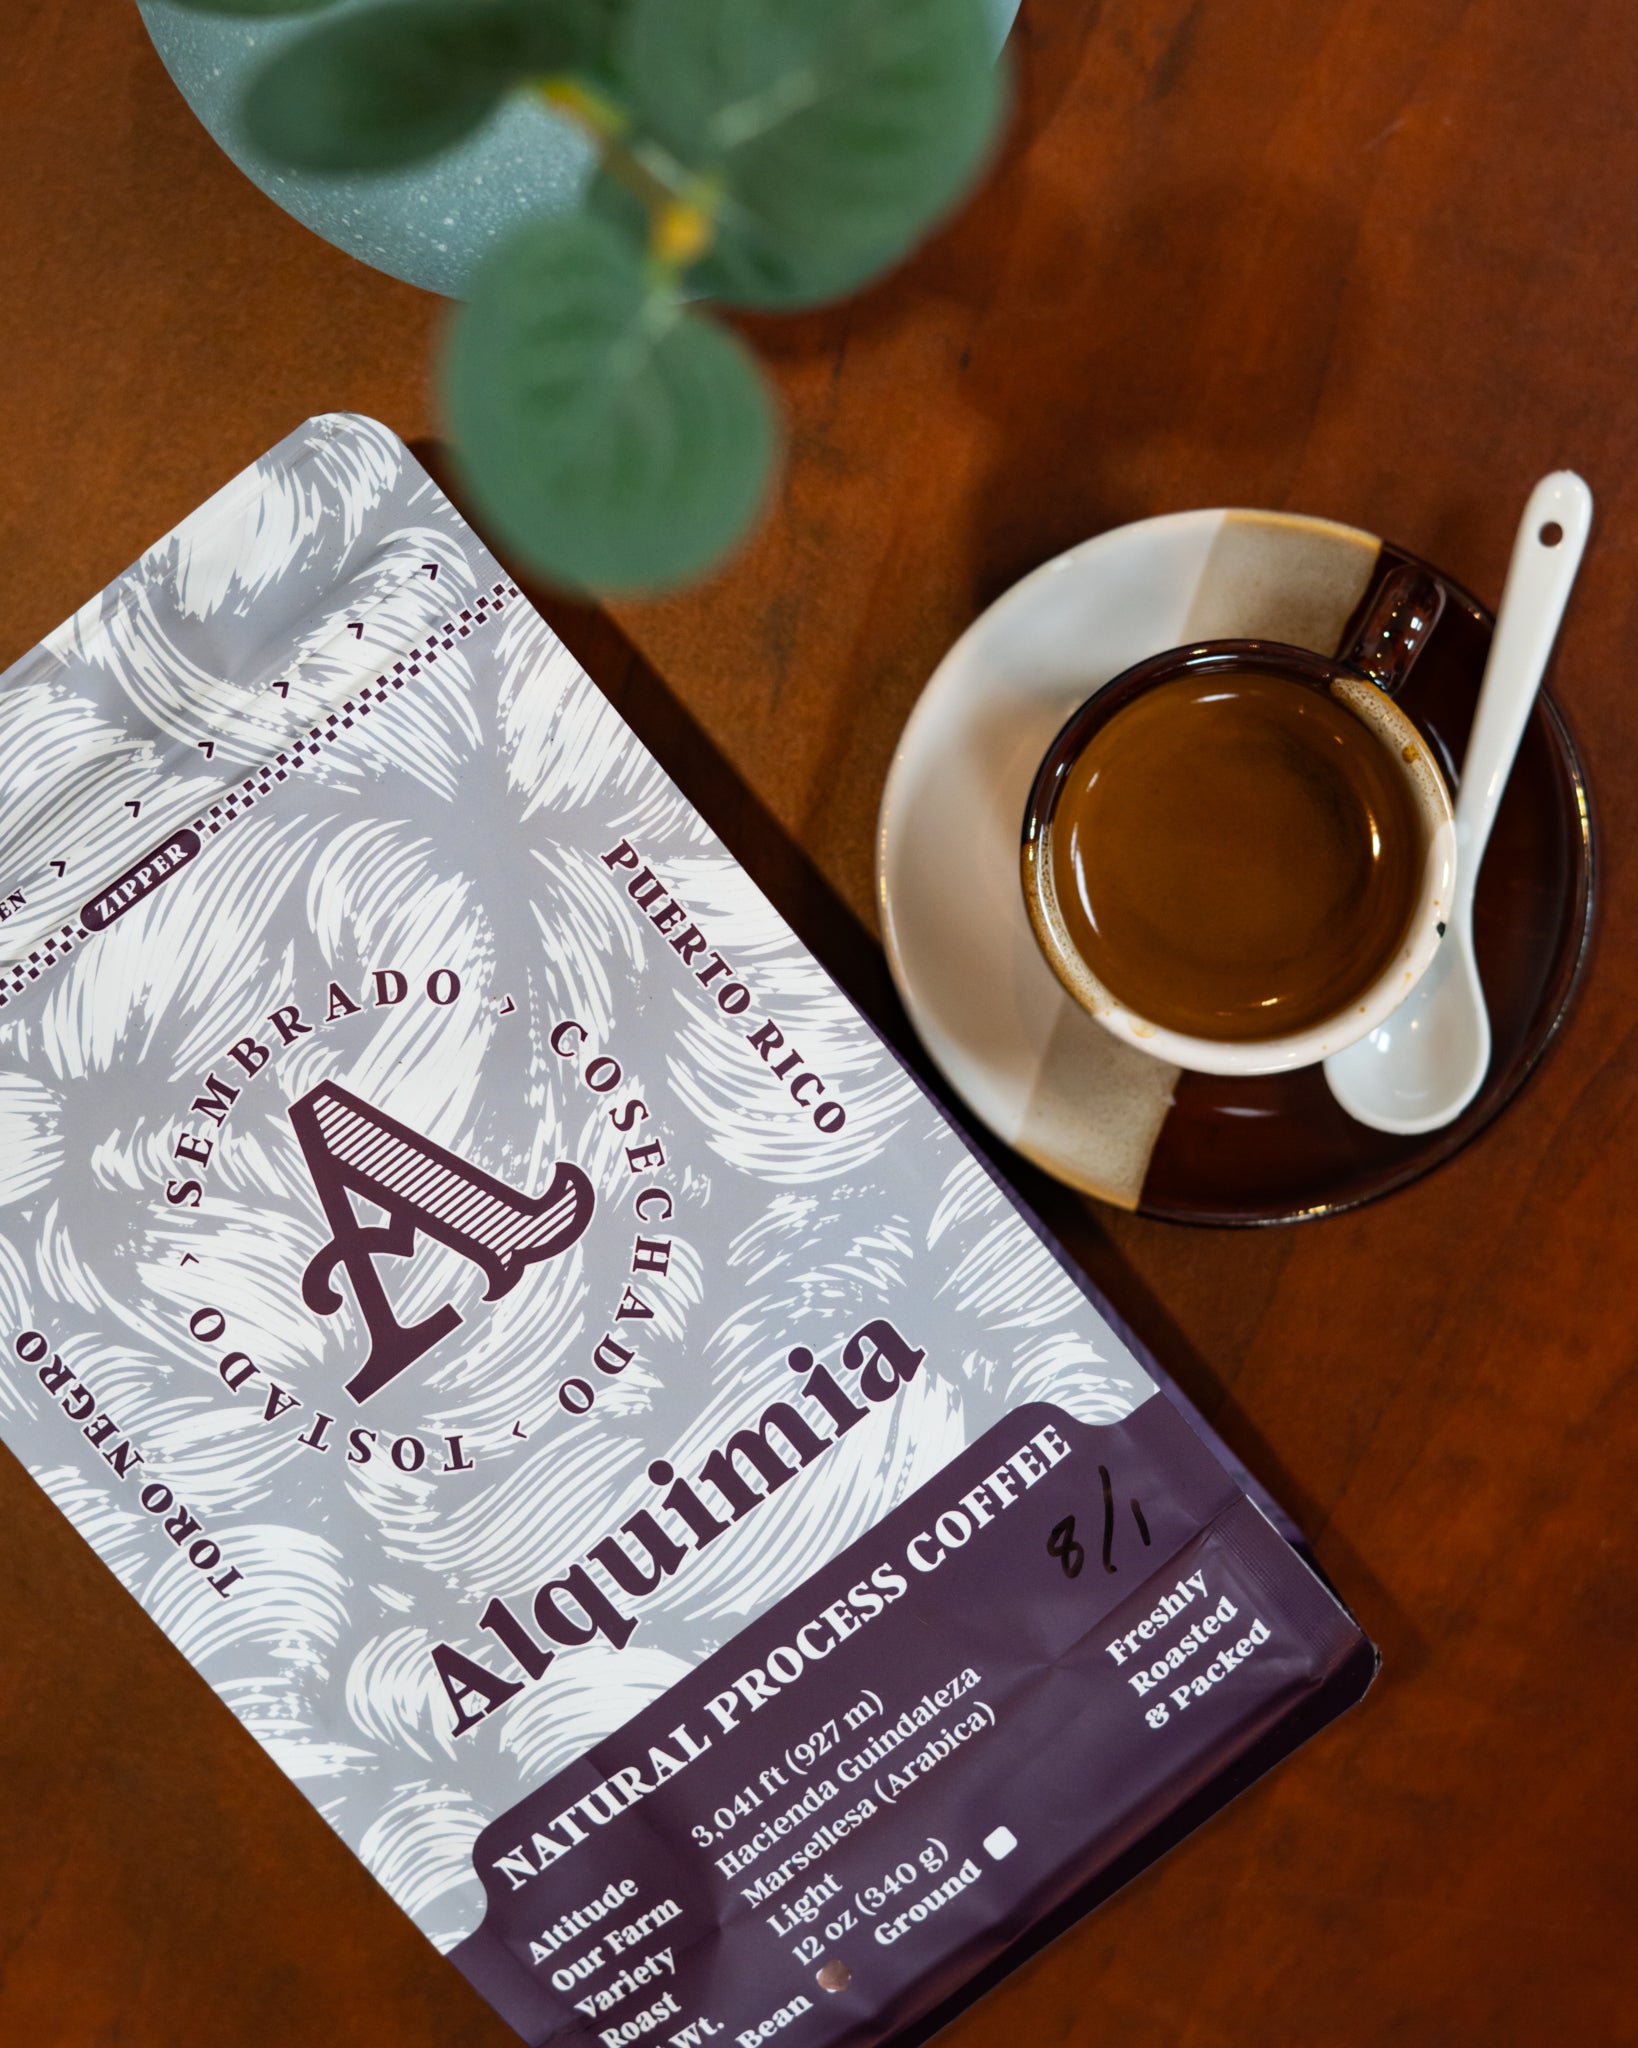 Alquimia Natural Process Coffee